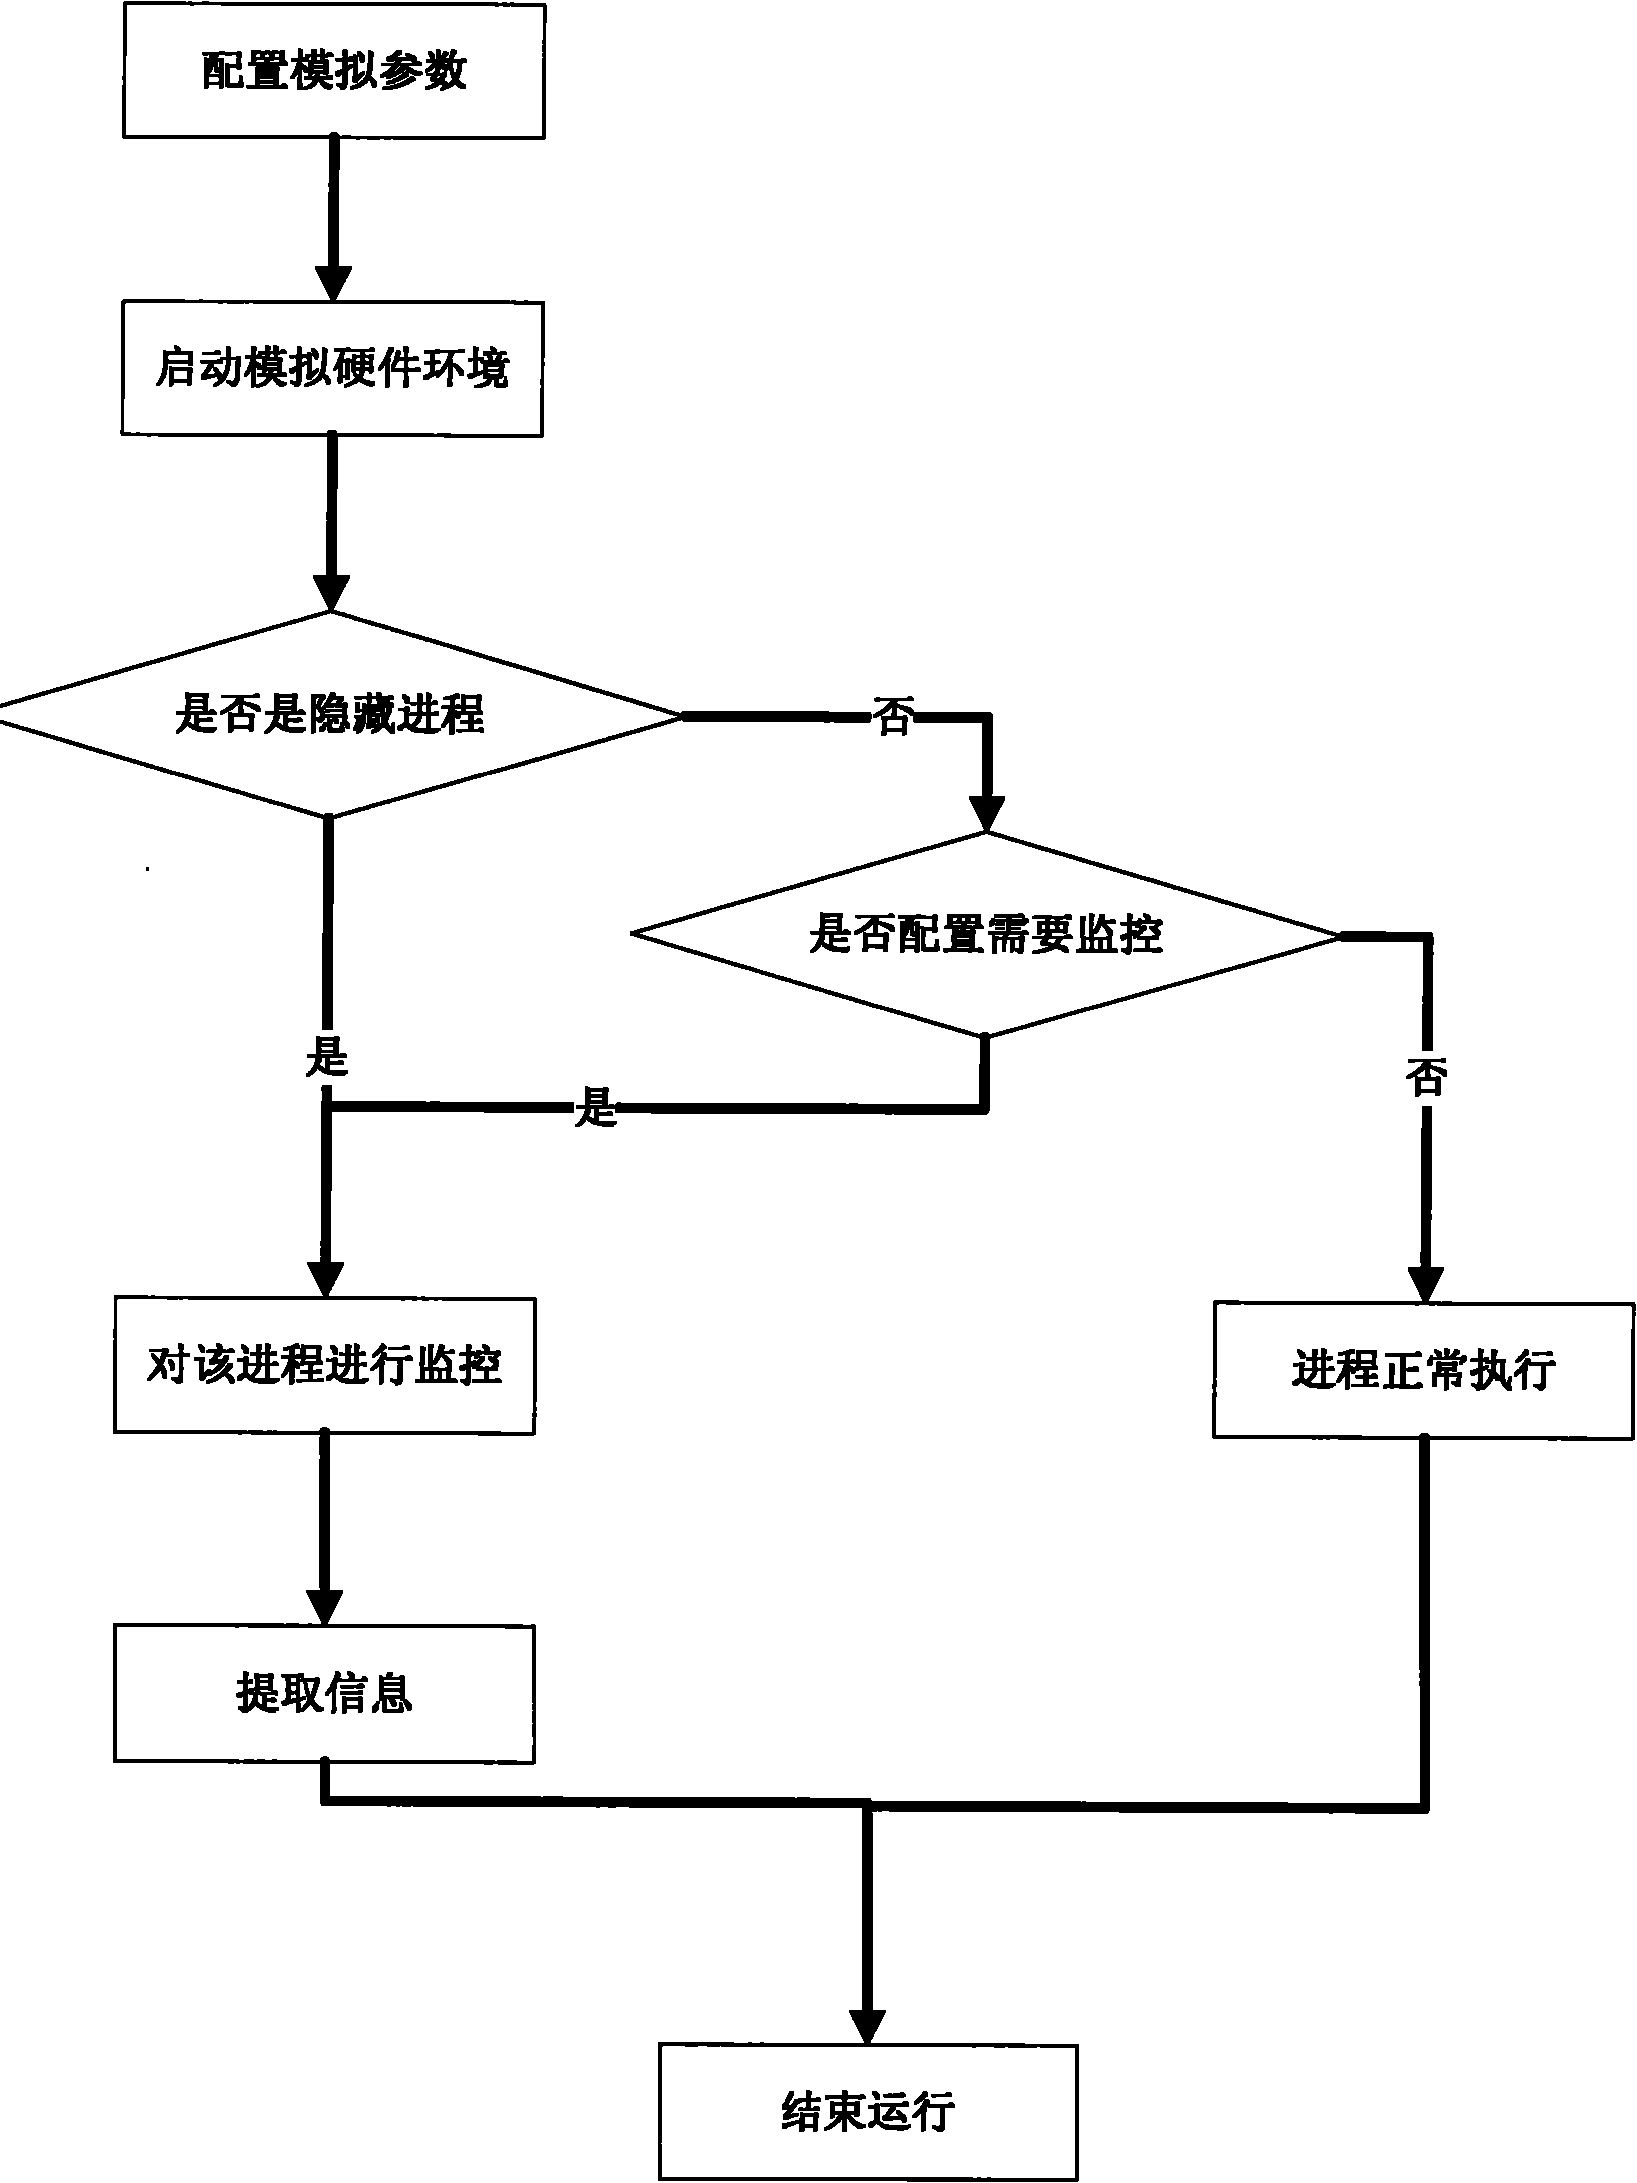 Method for processing hidden process based on hardware simulator